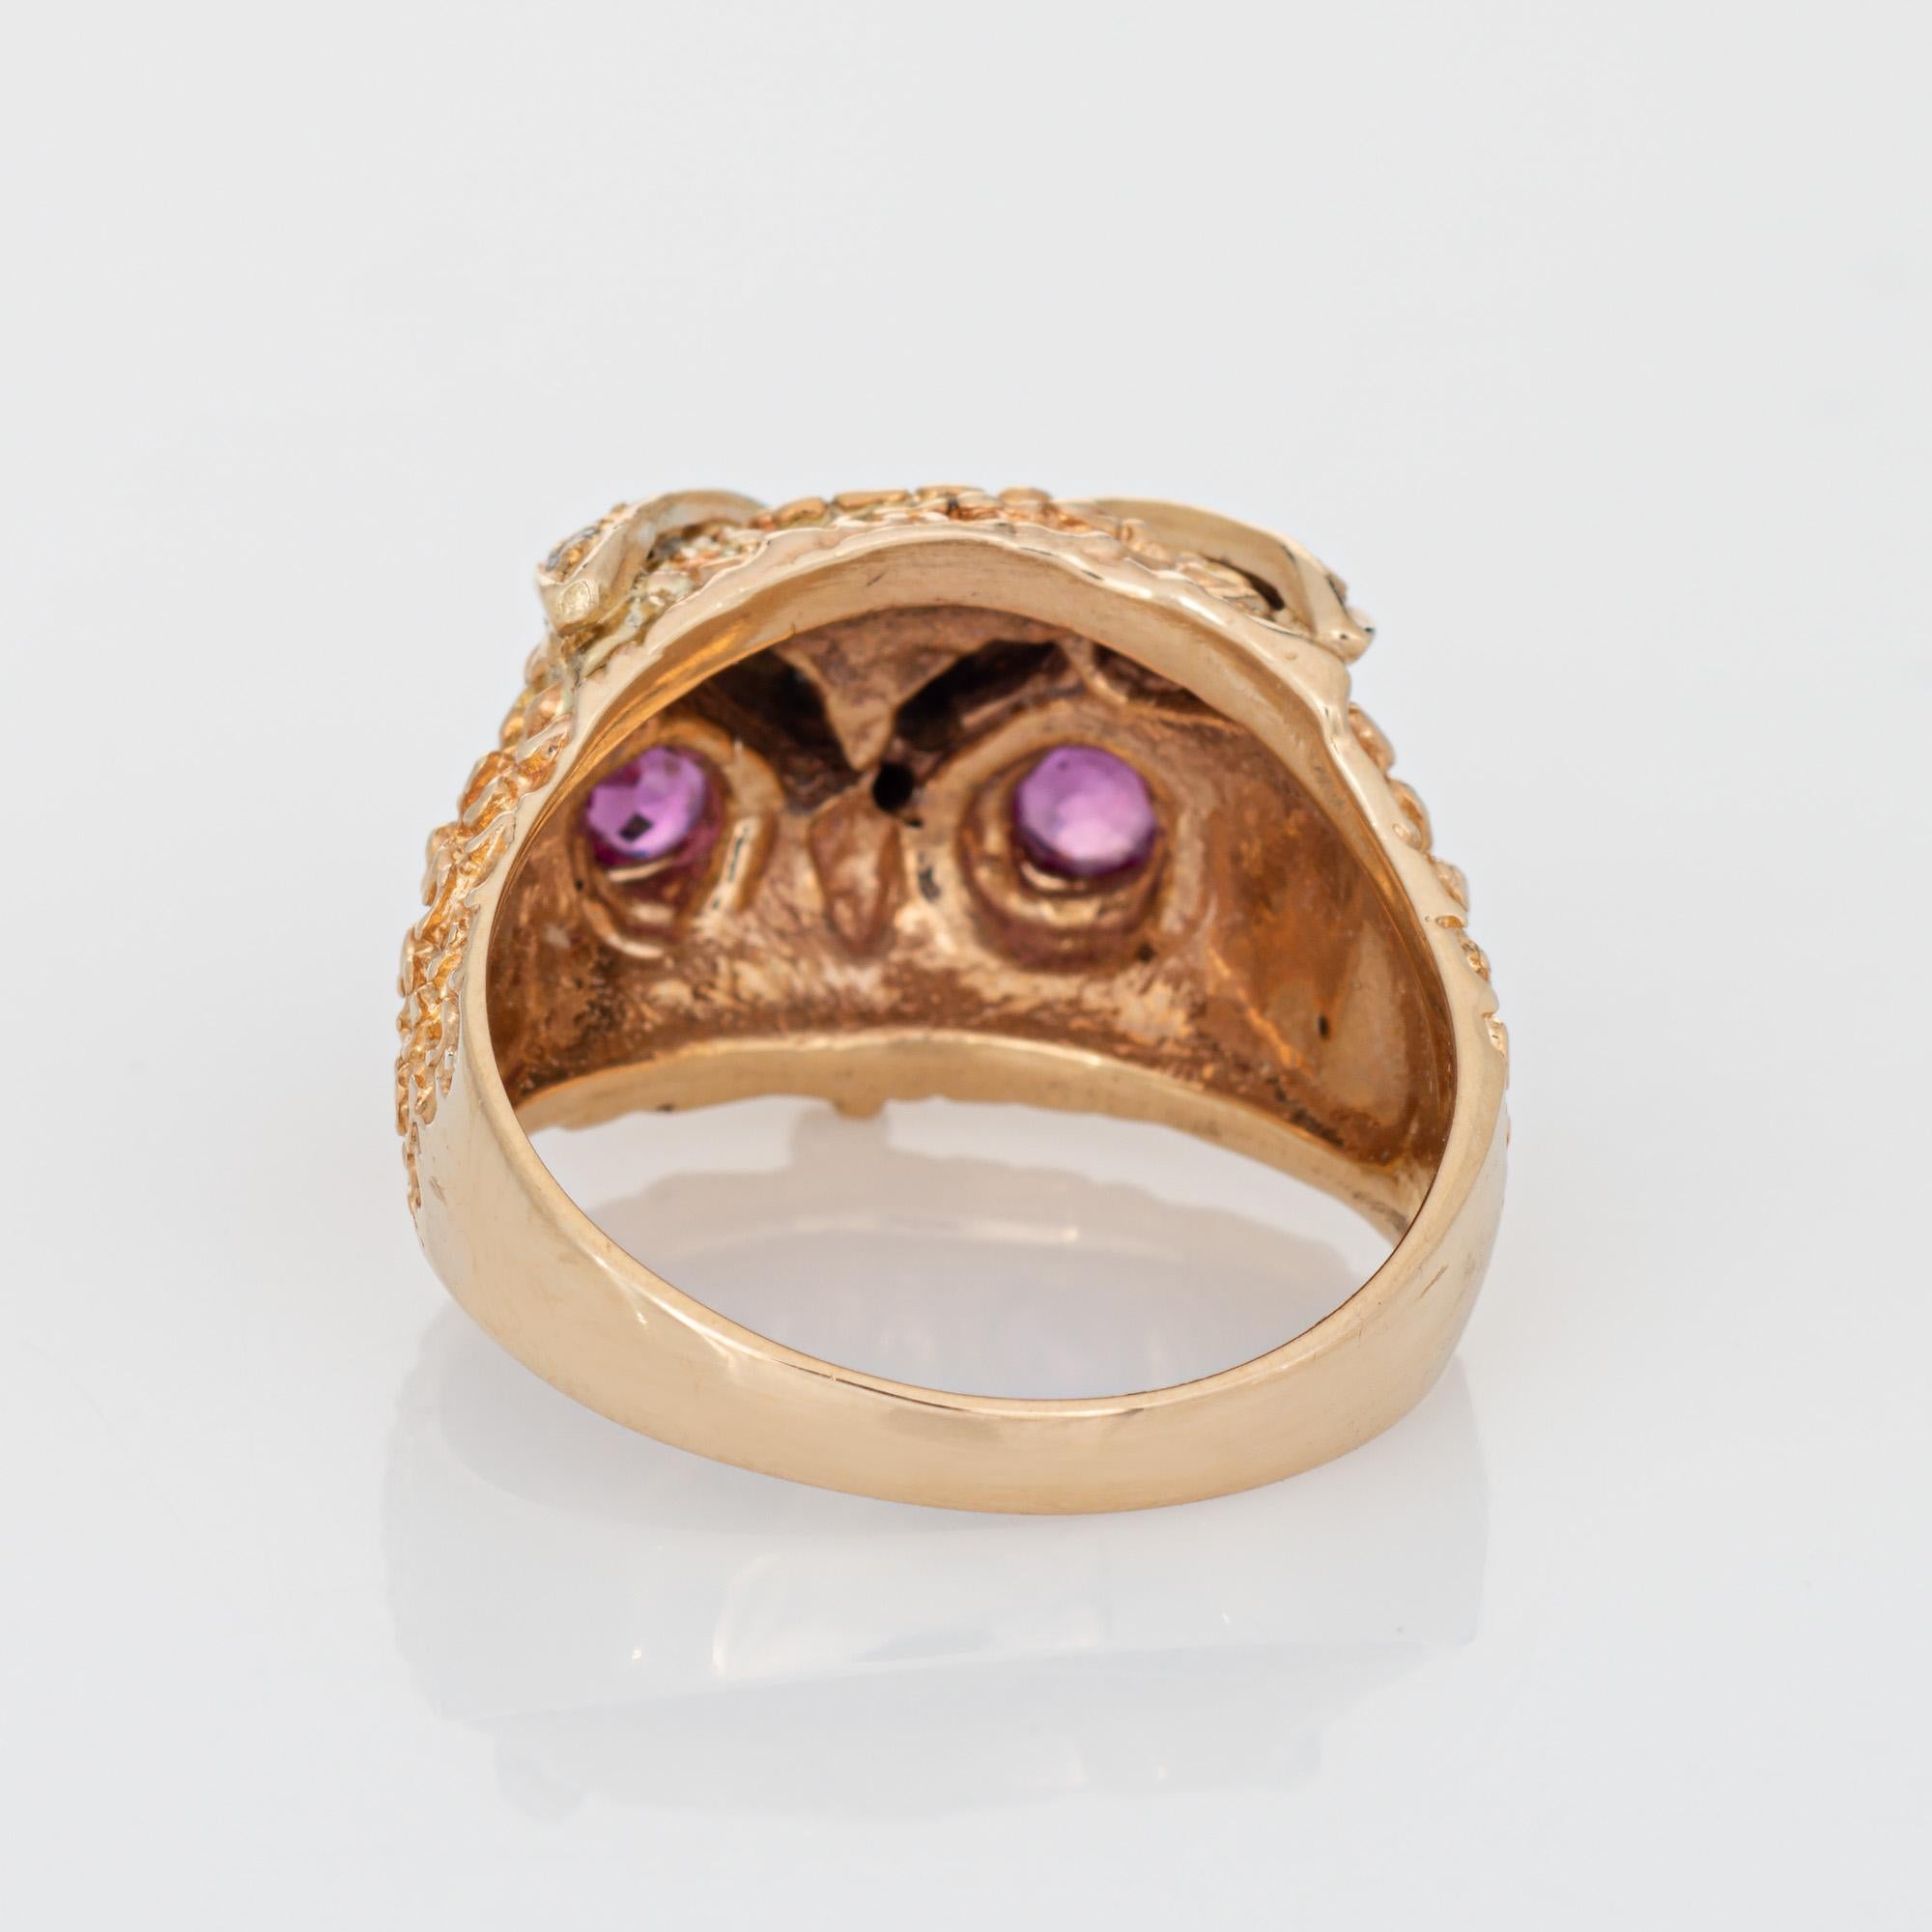 Round Cut Diamond Owl Ring Vintage 14k Yellow Gold Ruby Eyes Fine Jewelry Sz 7.5 For Sale